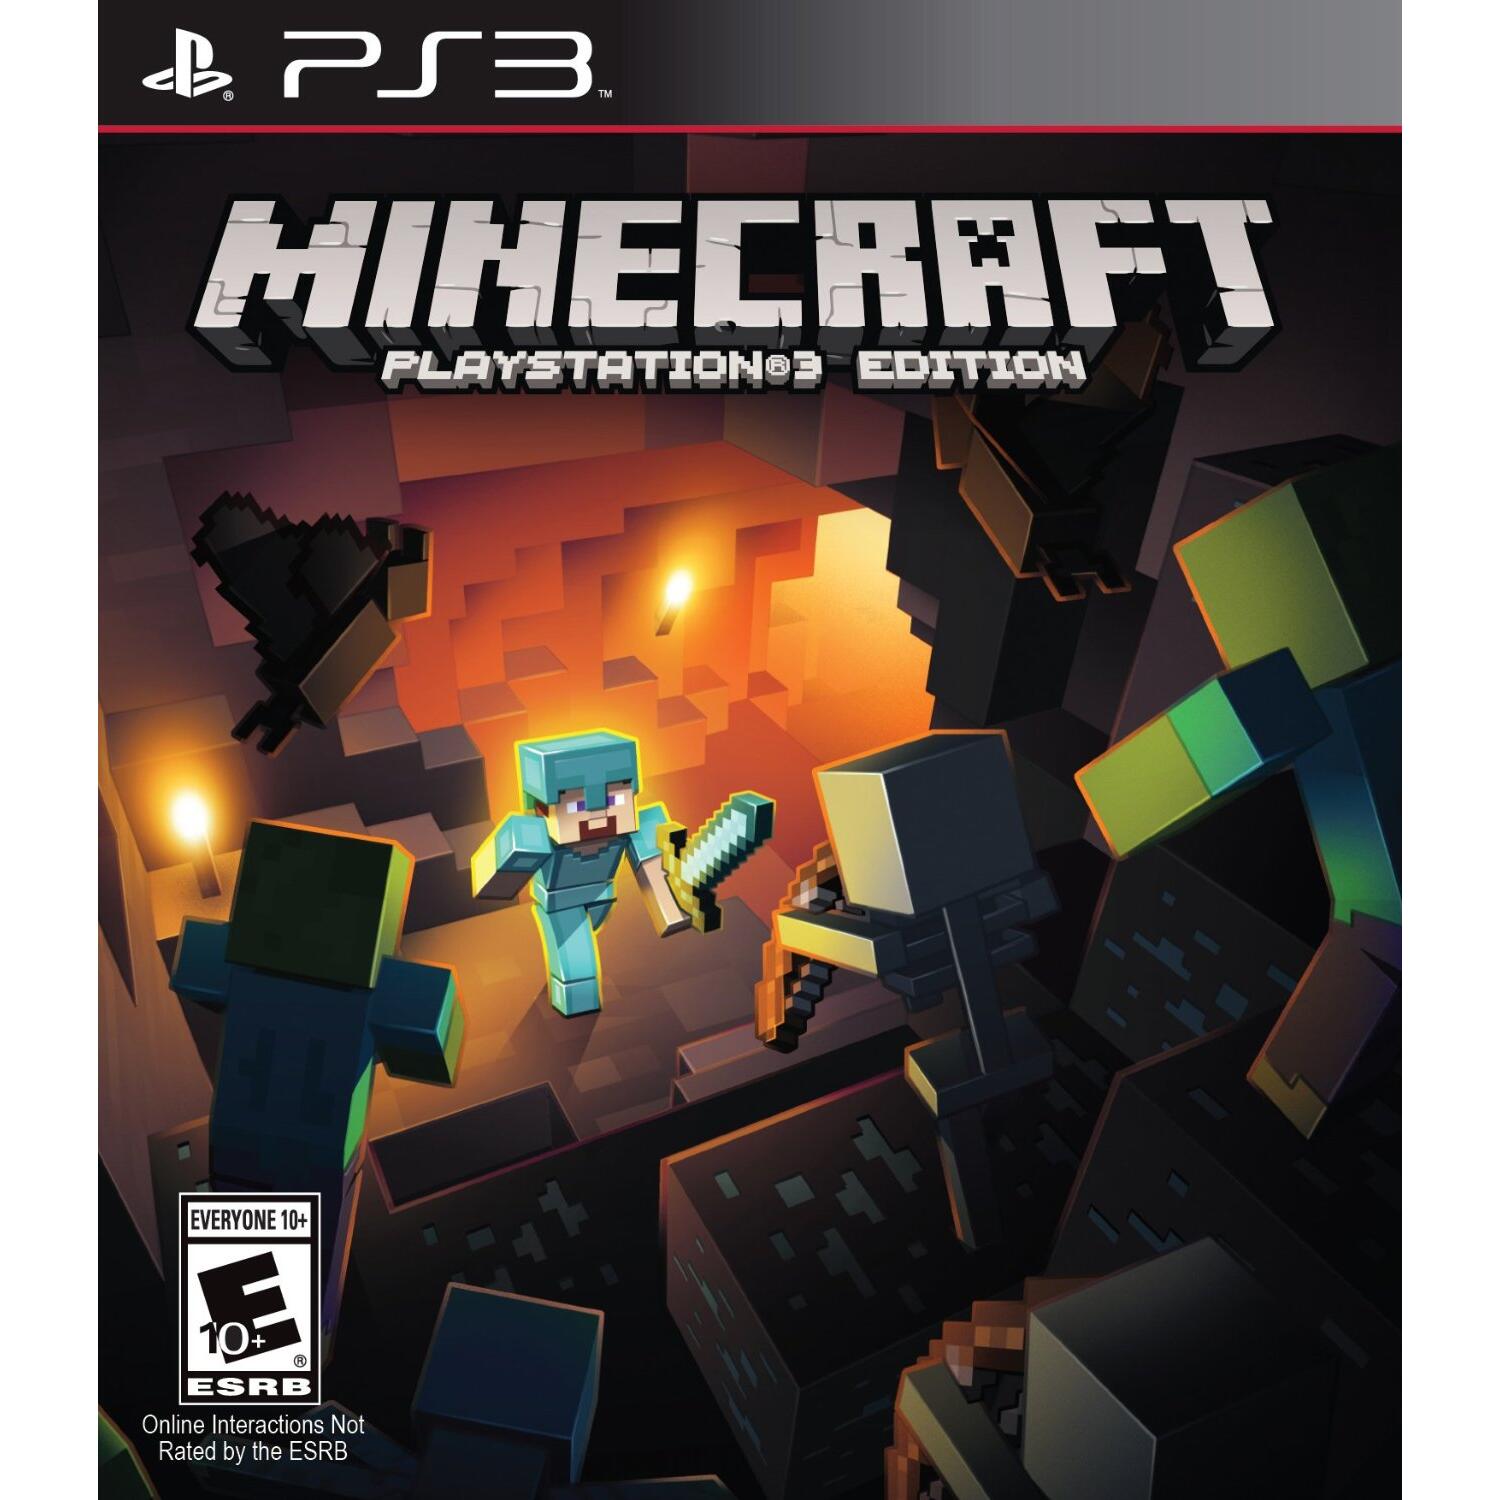 Symposium In tegenspraak martelen Minecraft - PlayStation 3 Edition (PS3) | €20.99 | Goedkoop!